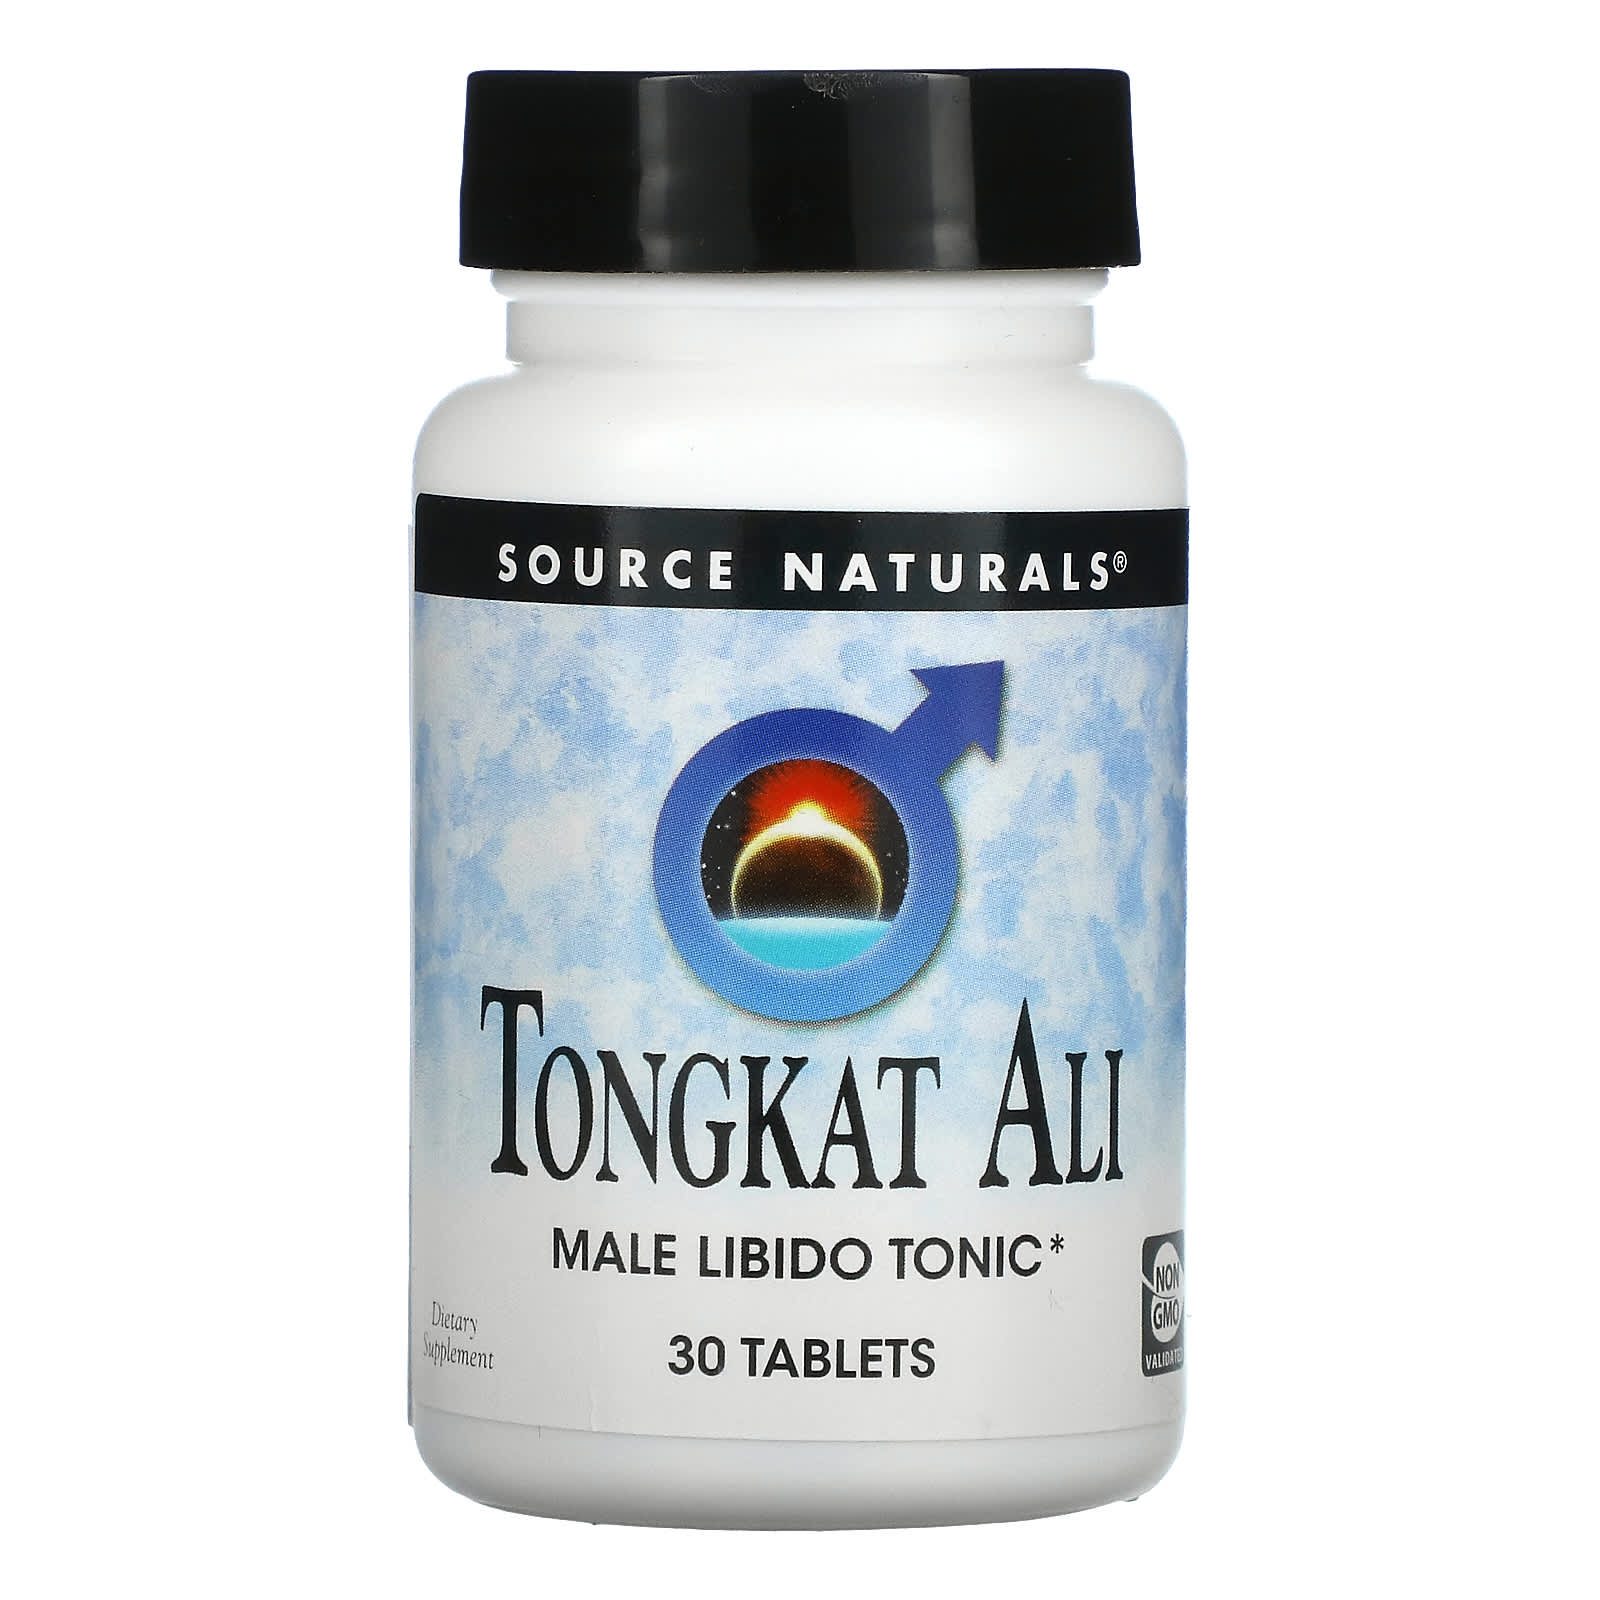 Тоник Source Naturals для мужского либидо, 30 таблеток